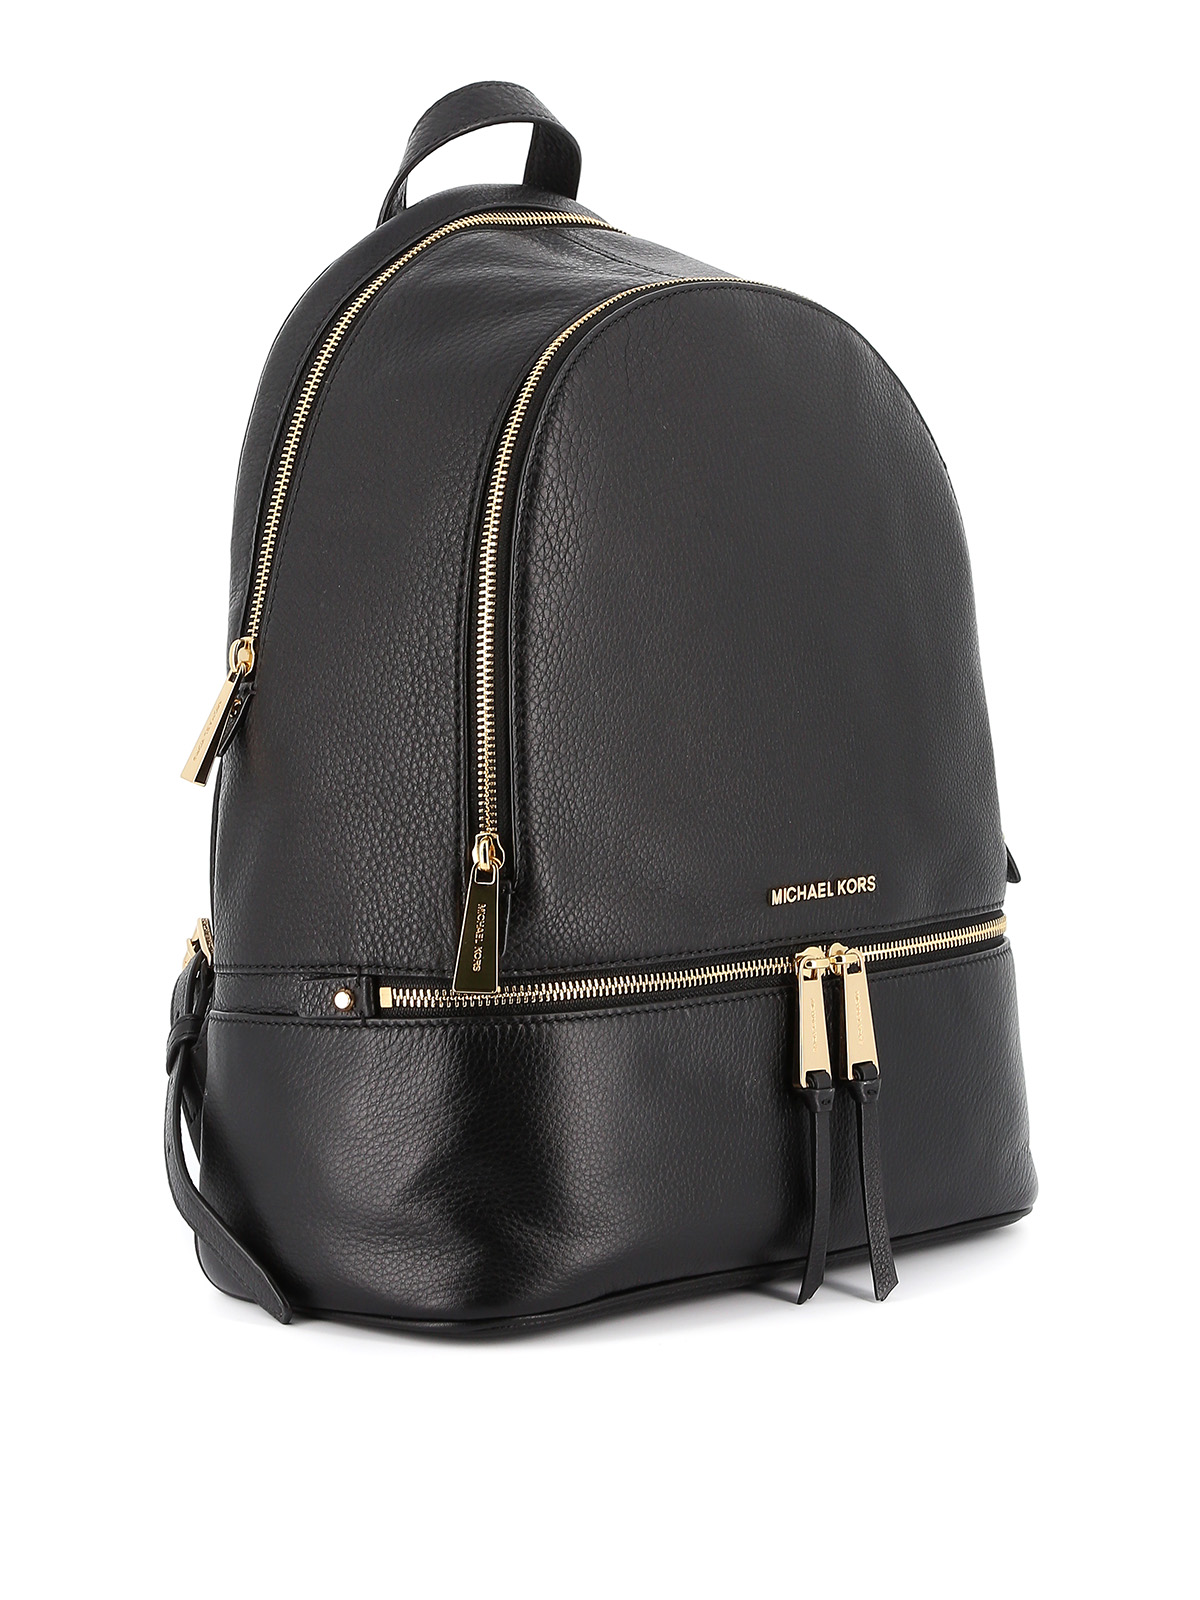 MICHAEL Michael Kors Rhea Large Backpack in Black